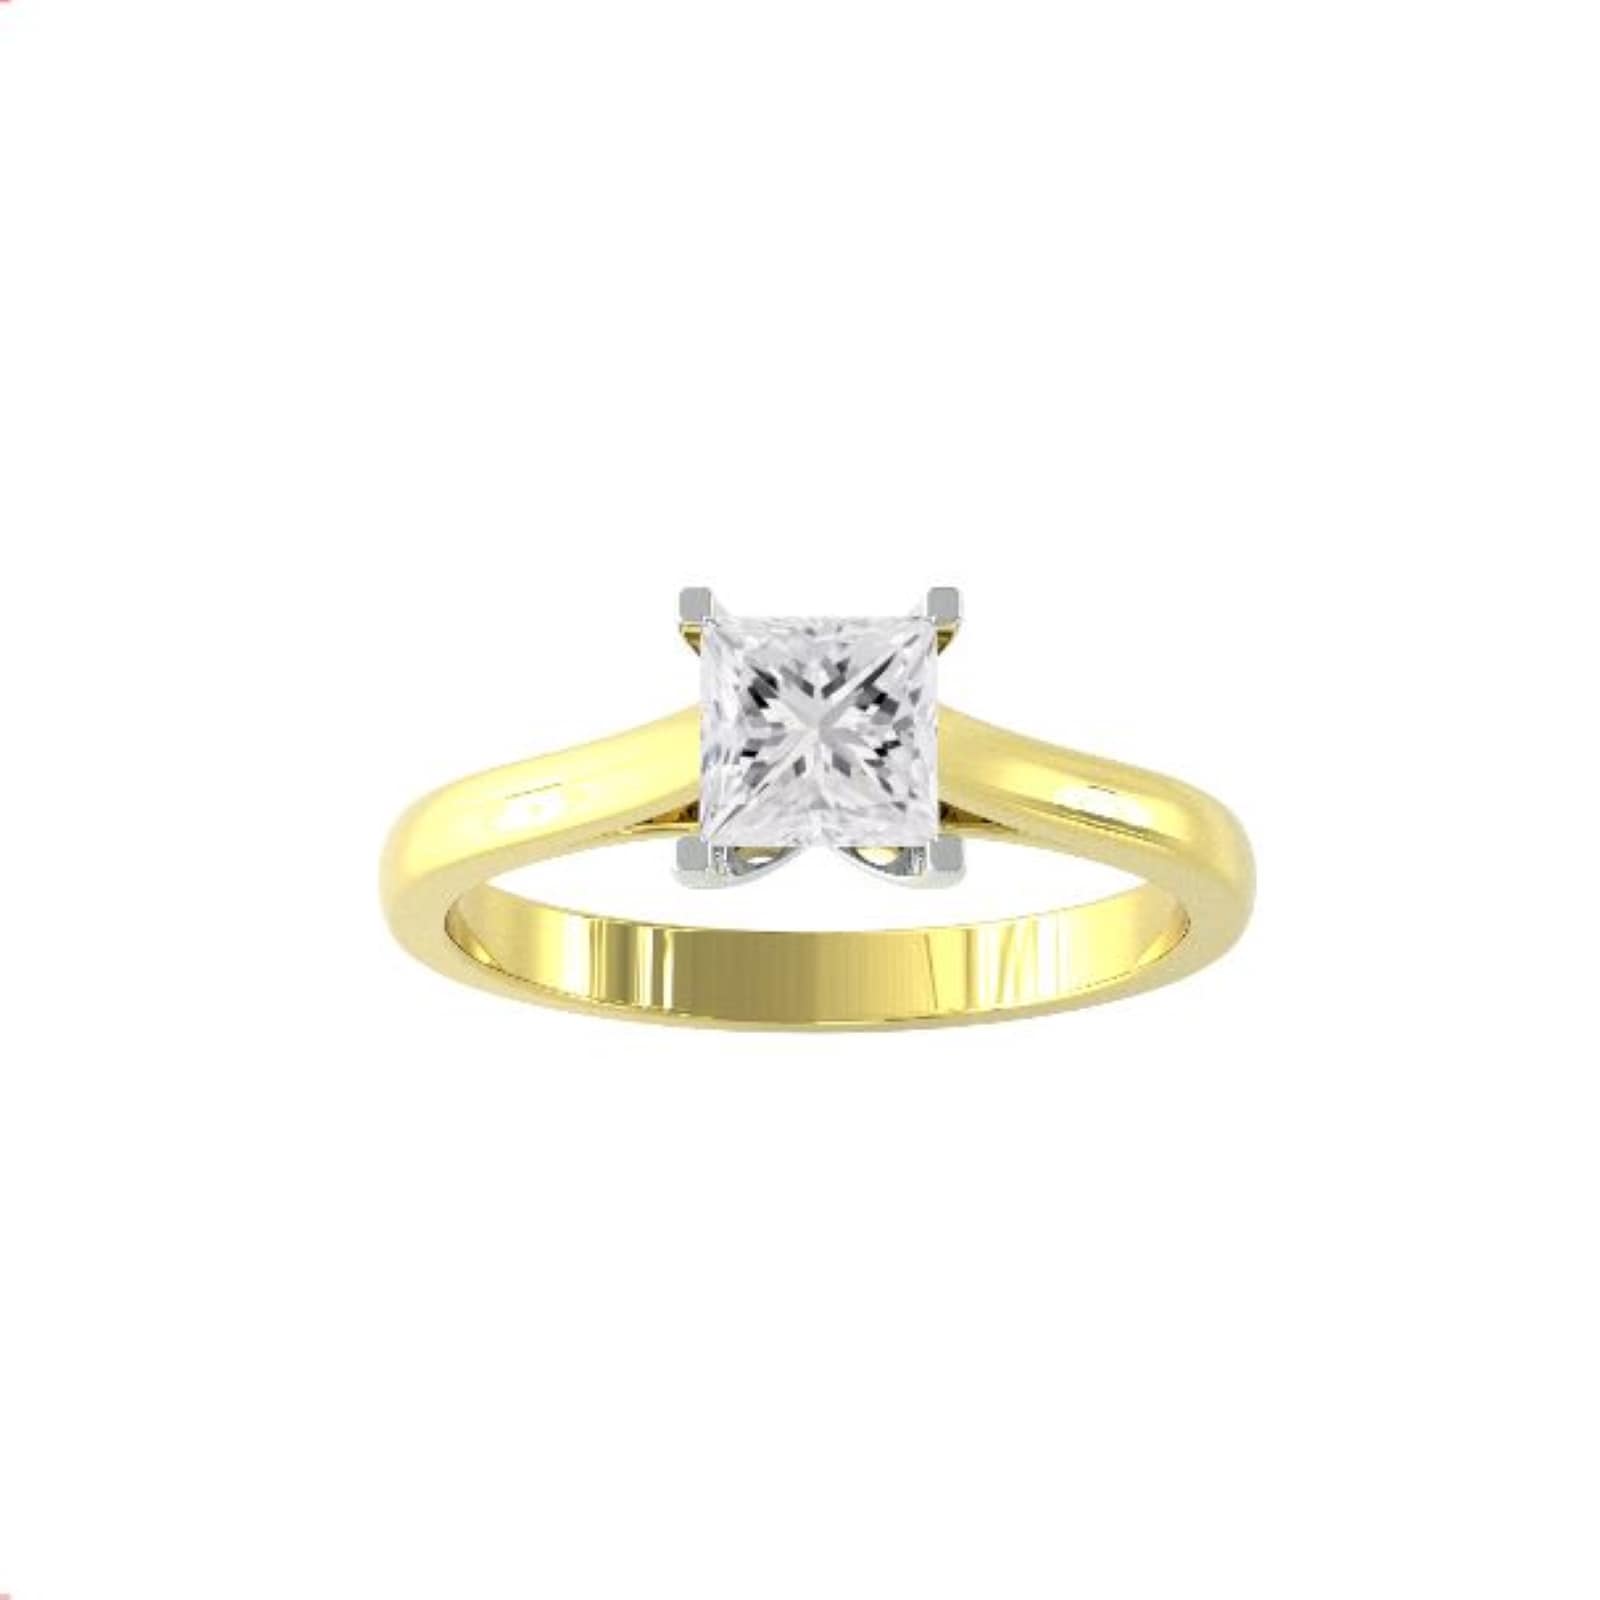 18ct Yellow Gold 0.75cttw Princess Cut Diamond Ring - Ring Size I.5